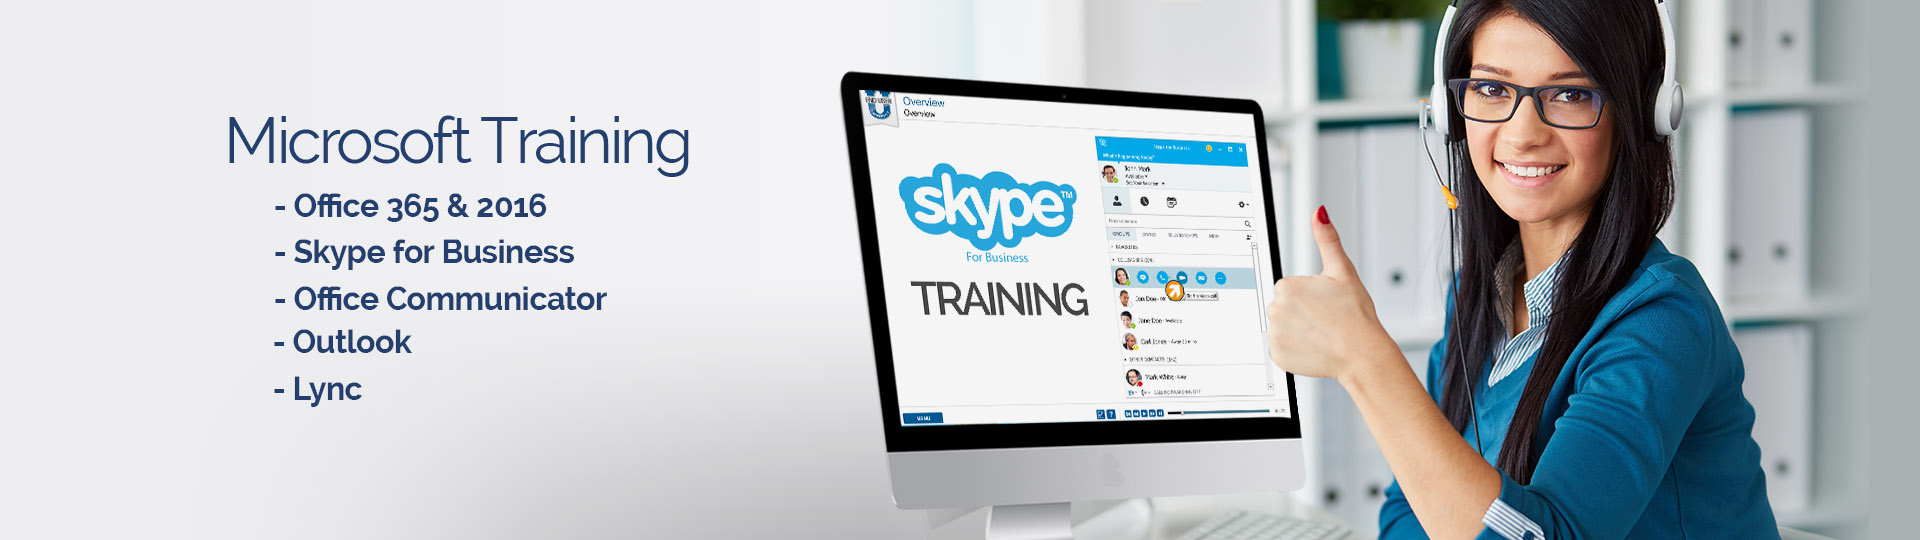 Skype training